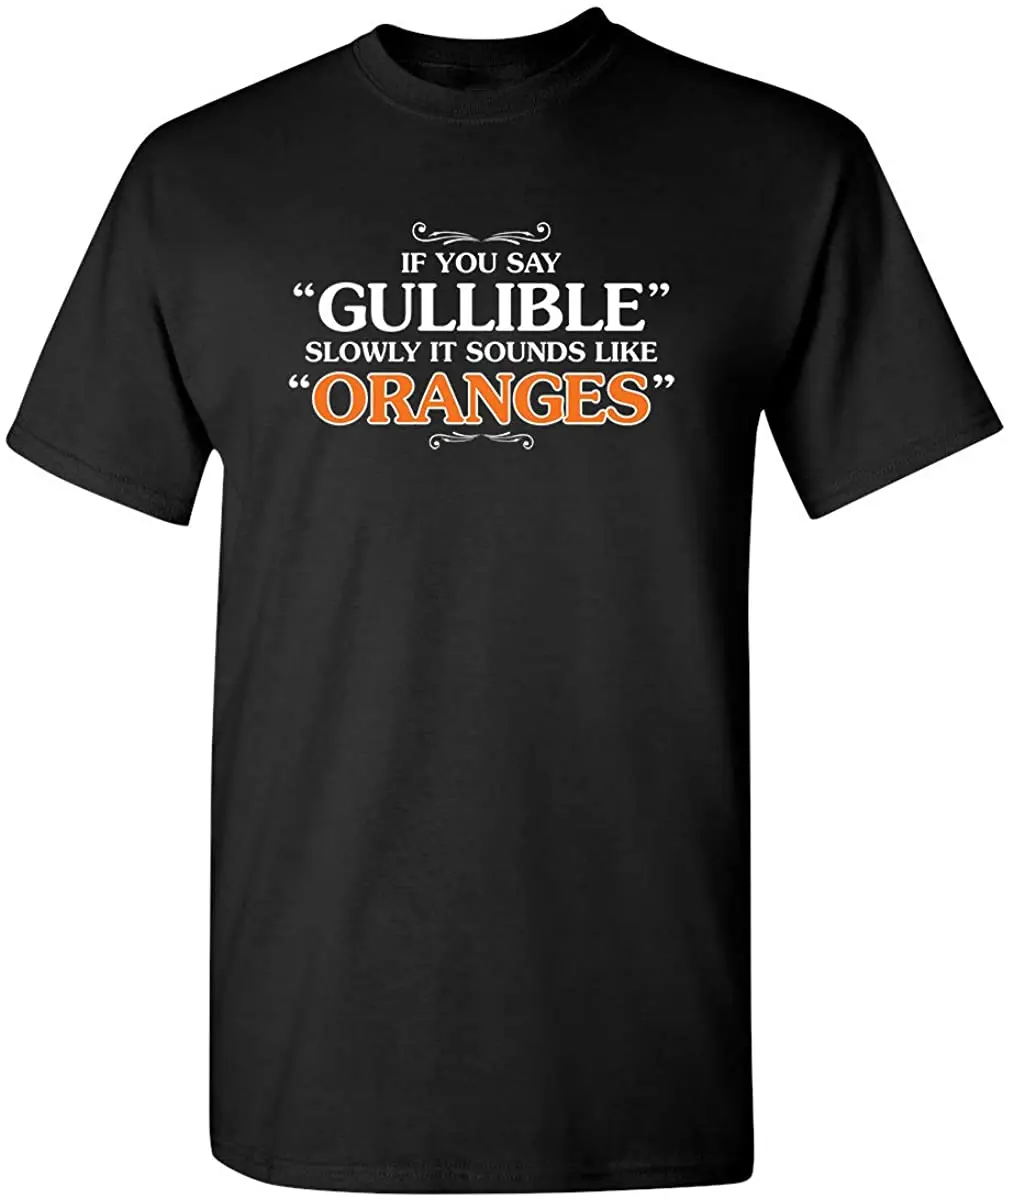 

It Sounds Like Oranges Adult Humor Mens Graphic Novelty Sarcastic Funny T Shirt Karate Graphic Tees Tee Shirt Harajuku Shirt